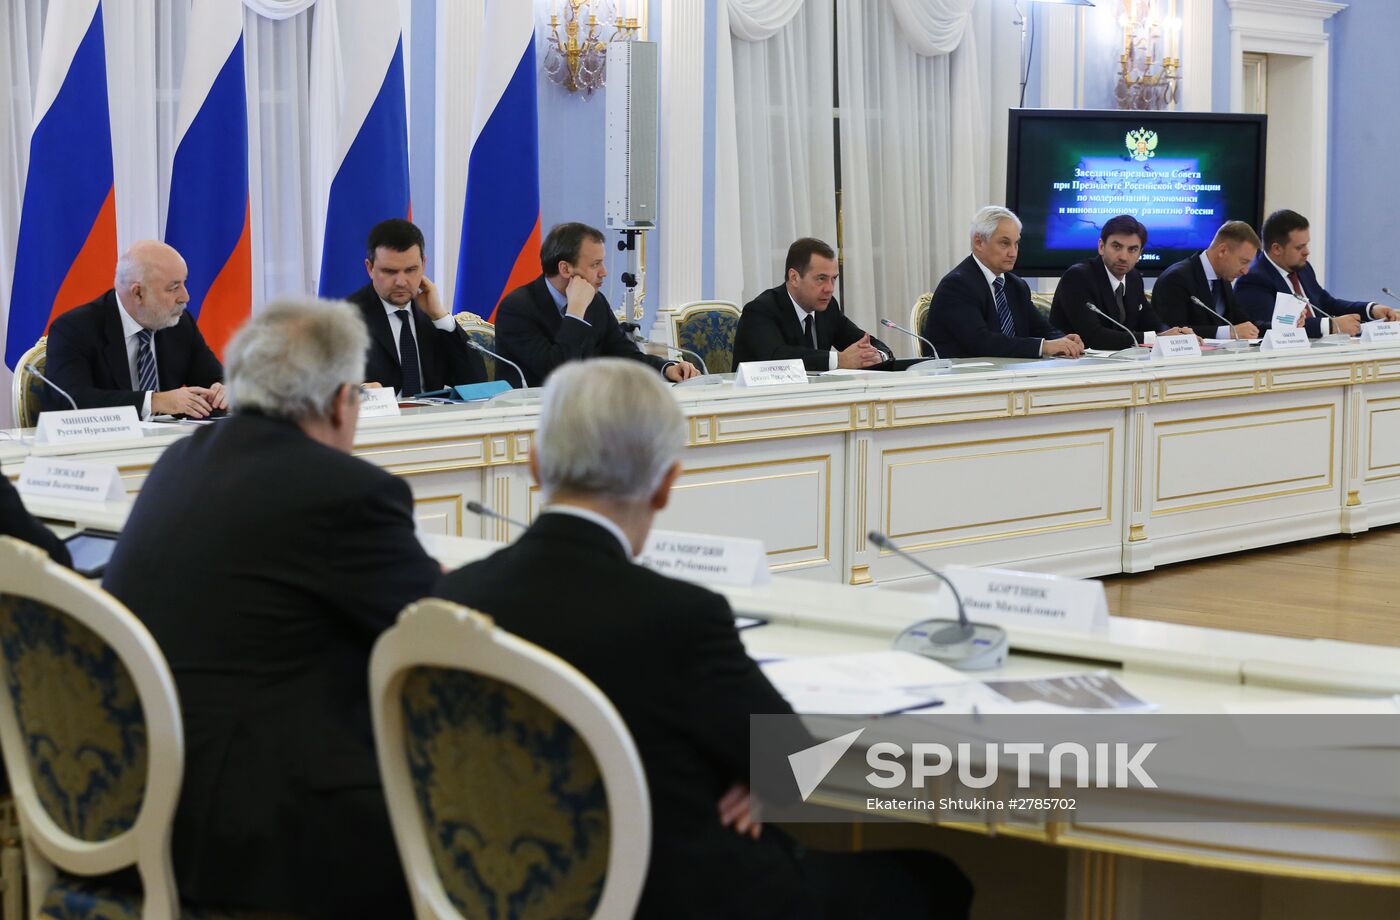 Prime Minister Medvedev chairs meeting of Economic Modernization Council's presidium